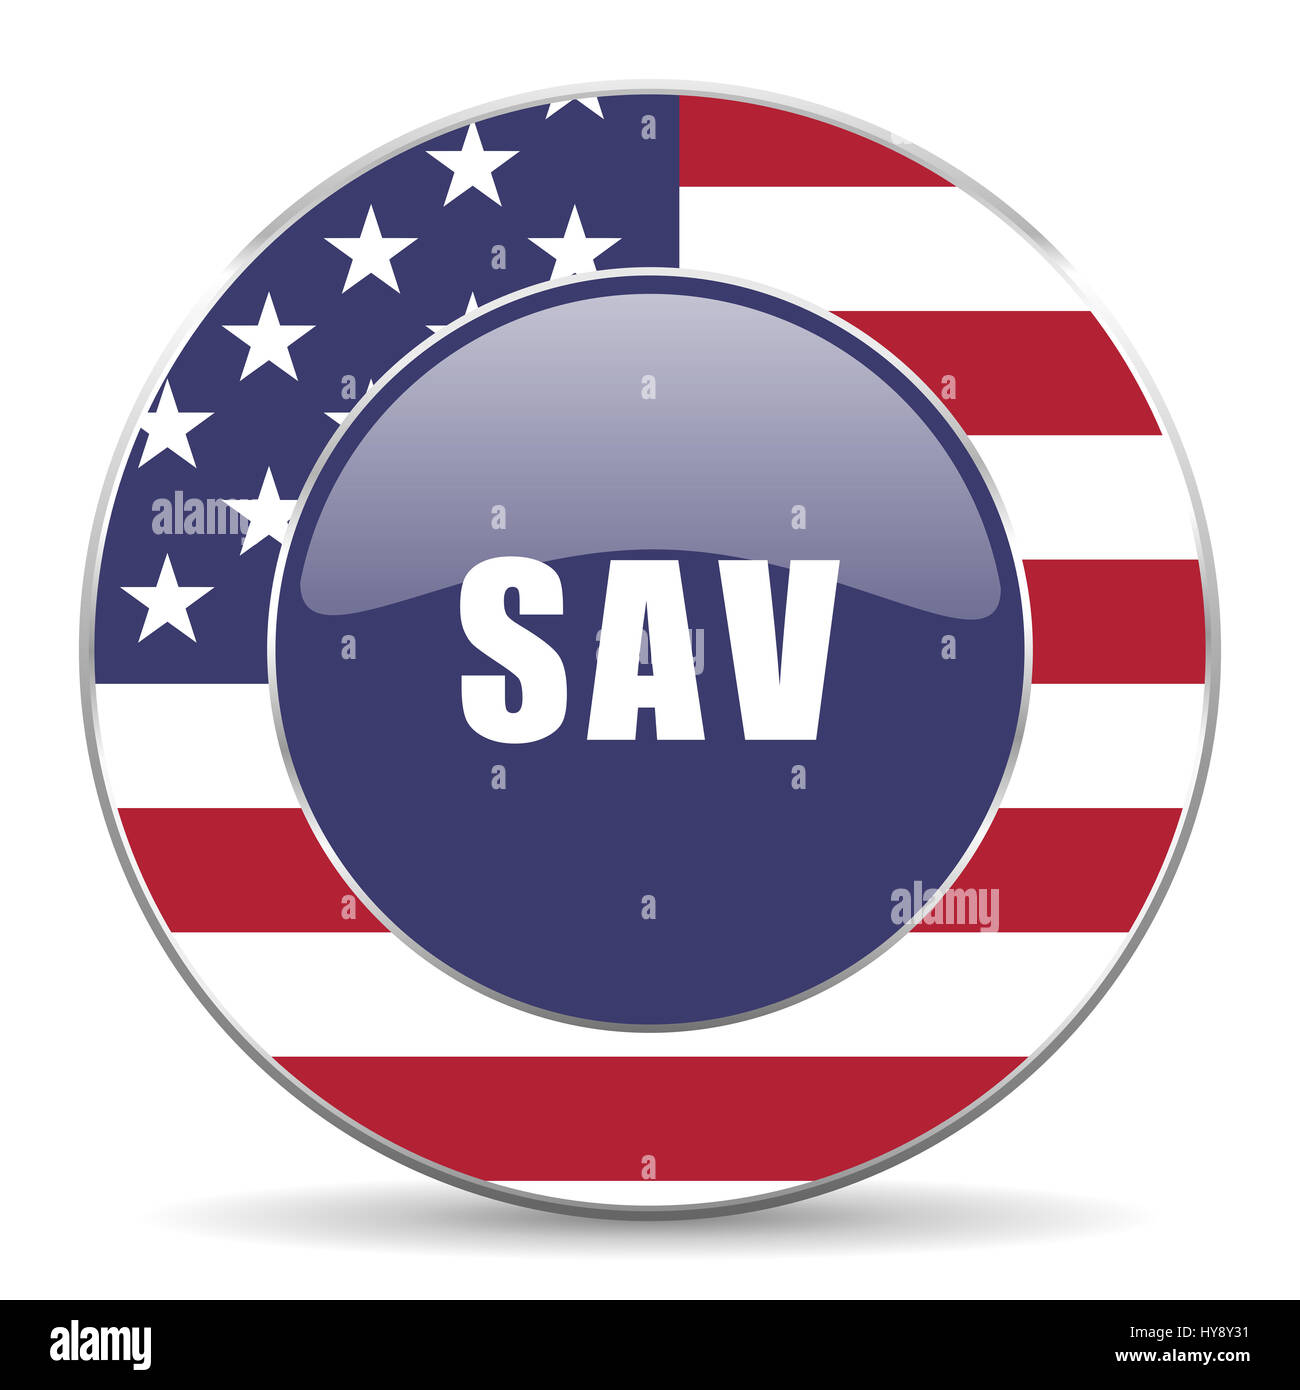 Sav usa design web american round internet icon with shadow on white background. Stock Photo